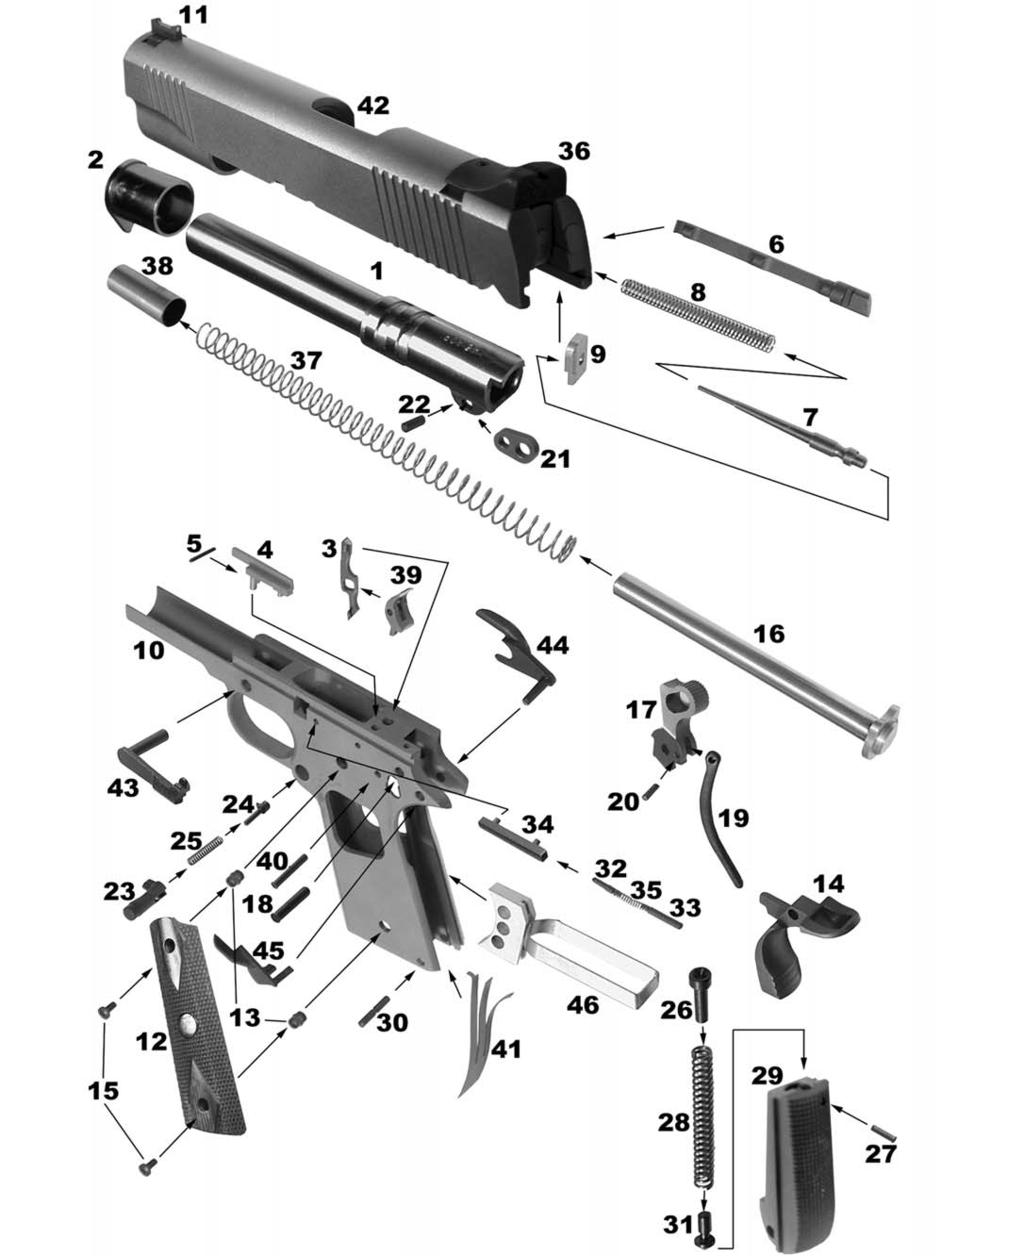 1911 Pistol Parts Replacement parts fit Colt, Springfield, all 1911 manufacturers Top quality parts, CNC